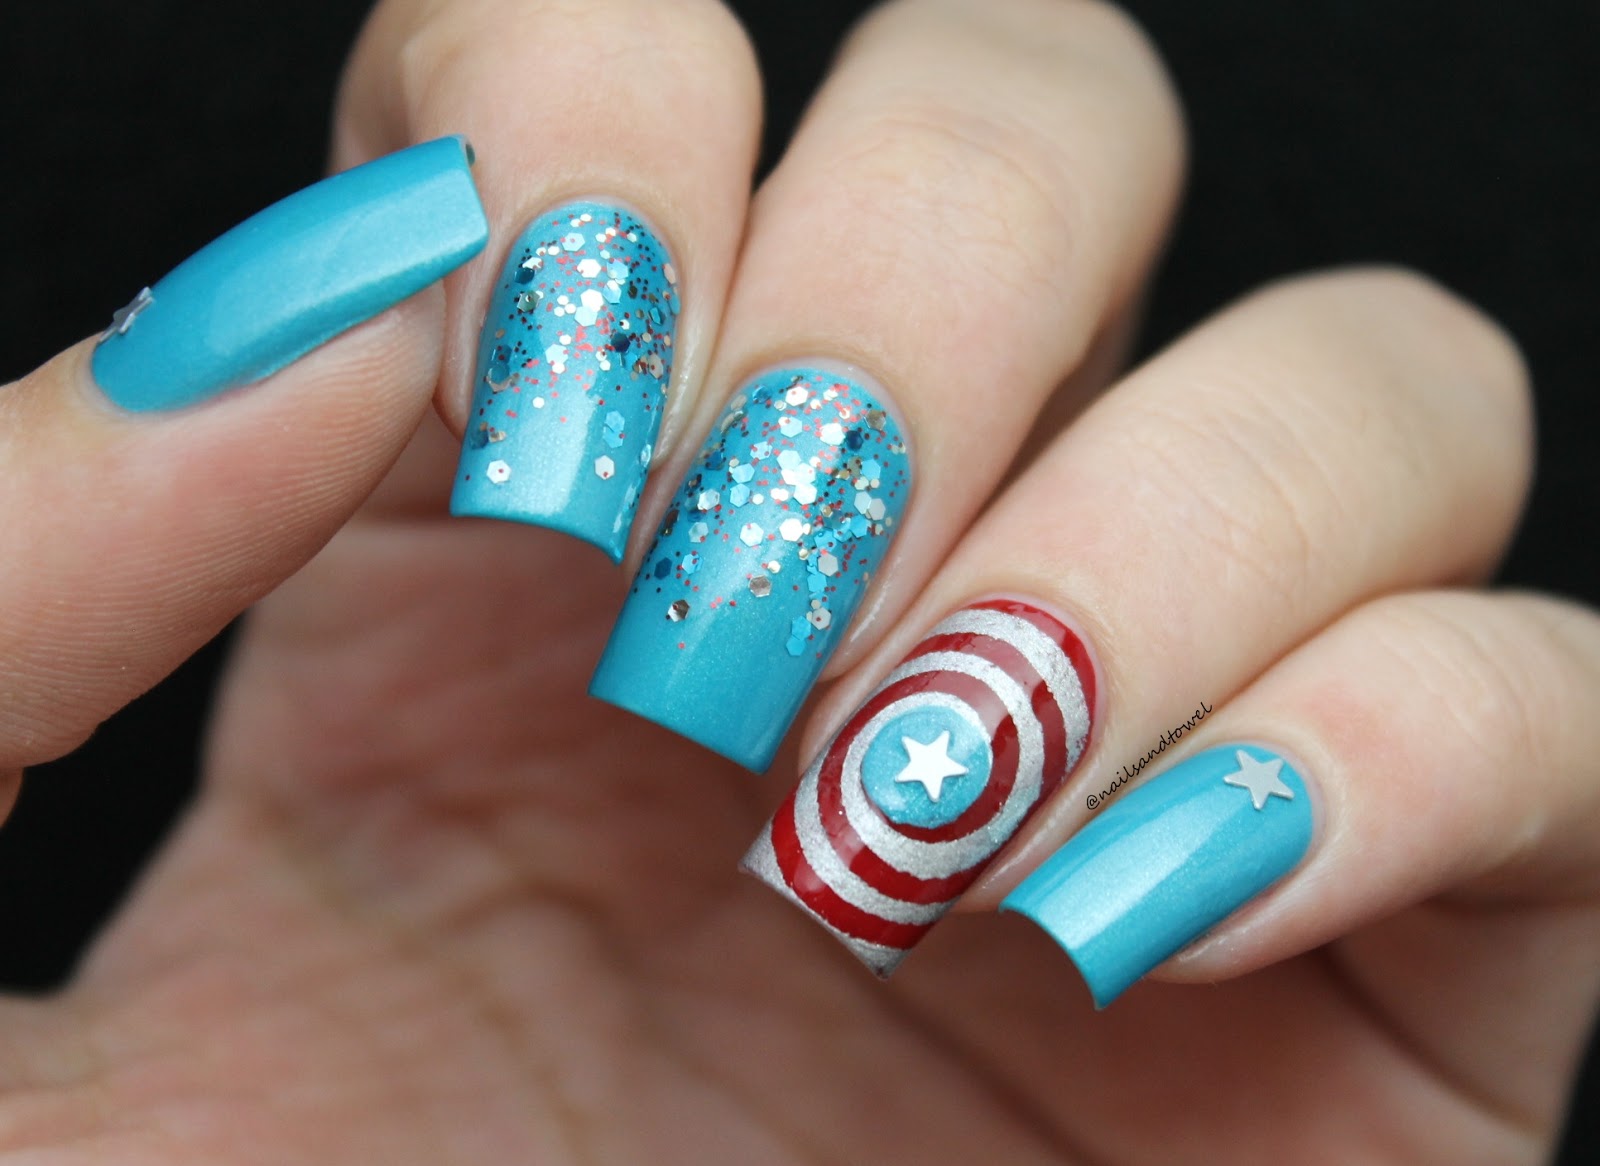 5. "Captain America Nail Designs" - wide 9